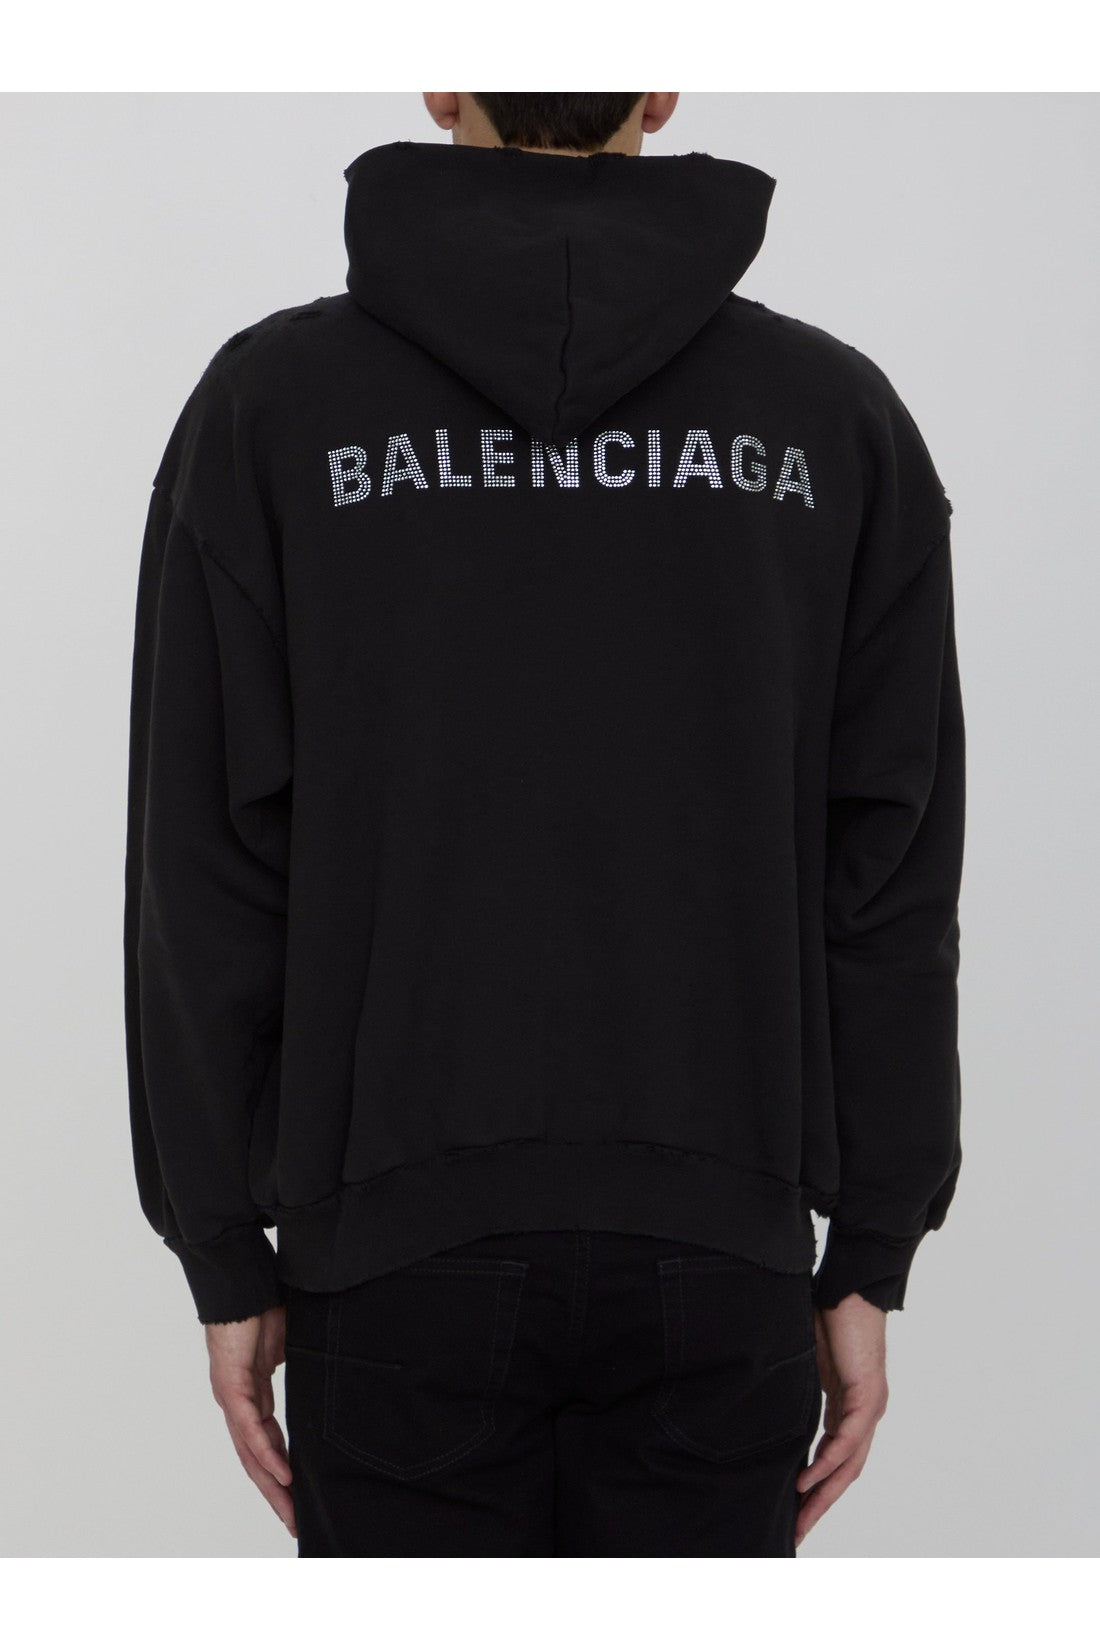 Balenciaga Back hoodie